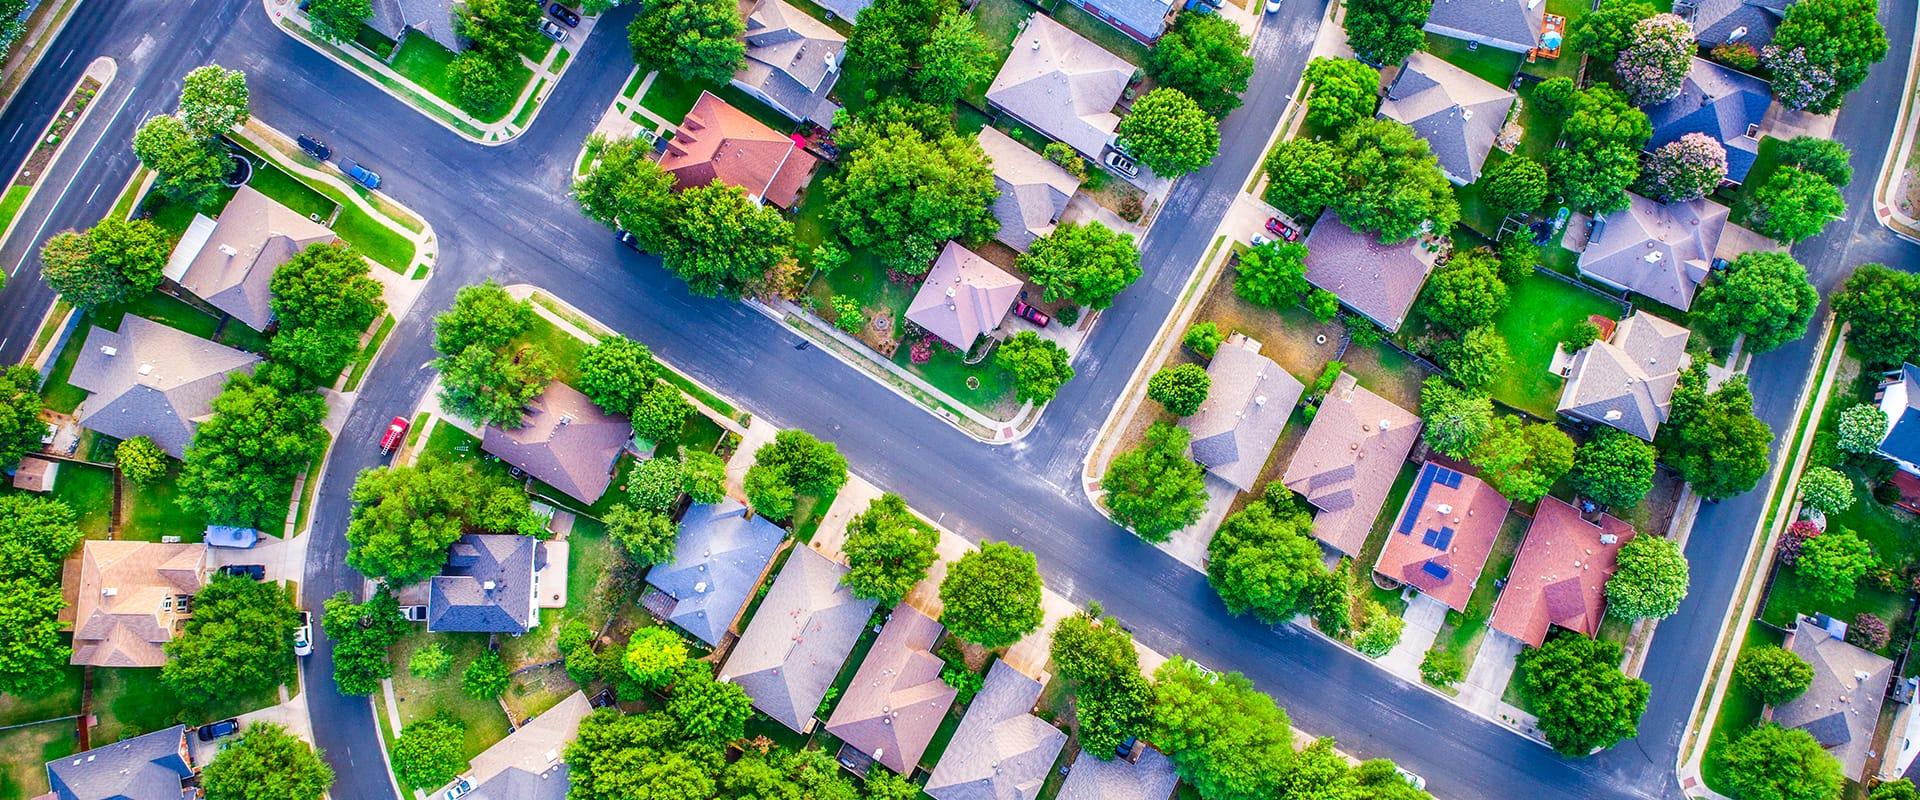 aerial view of a residential neighborhood in mckinney texas